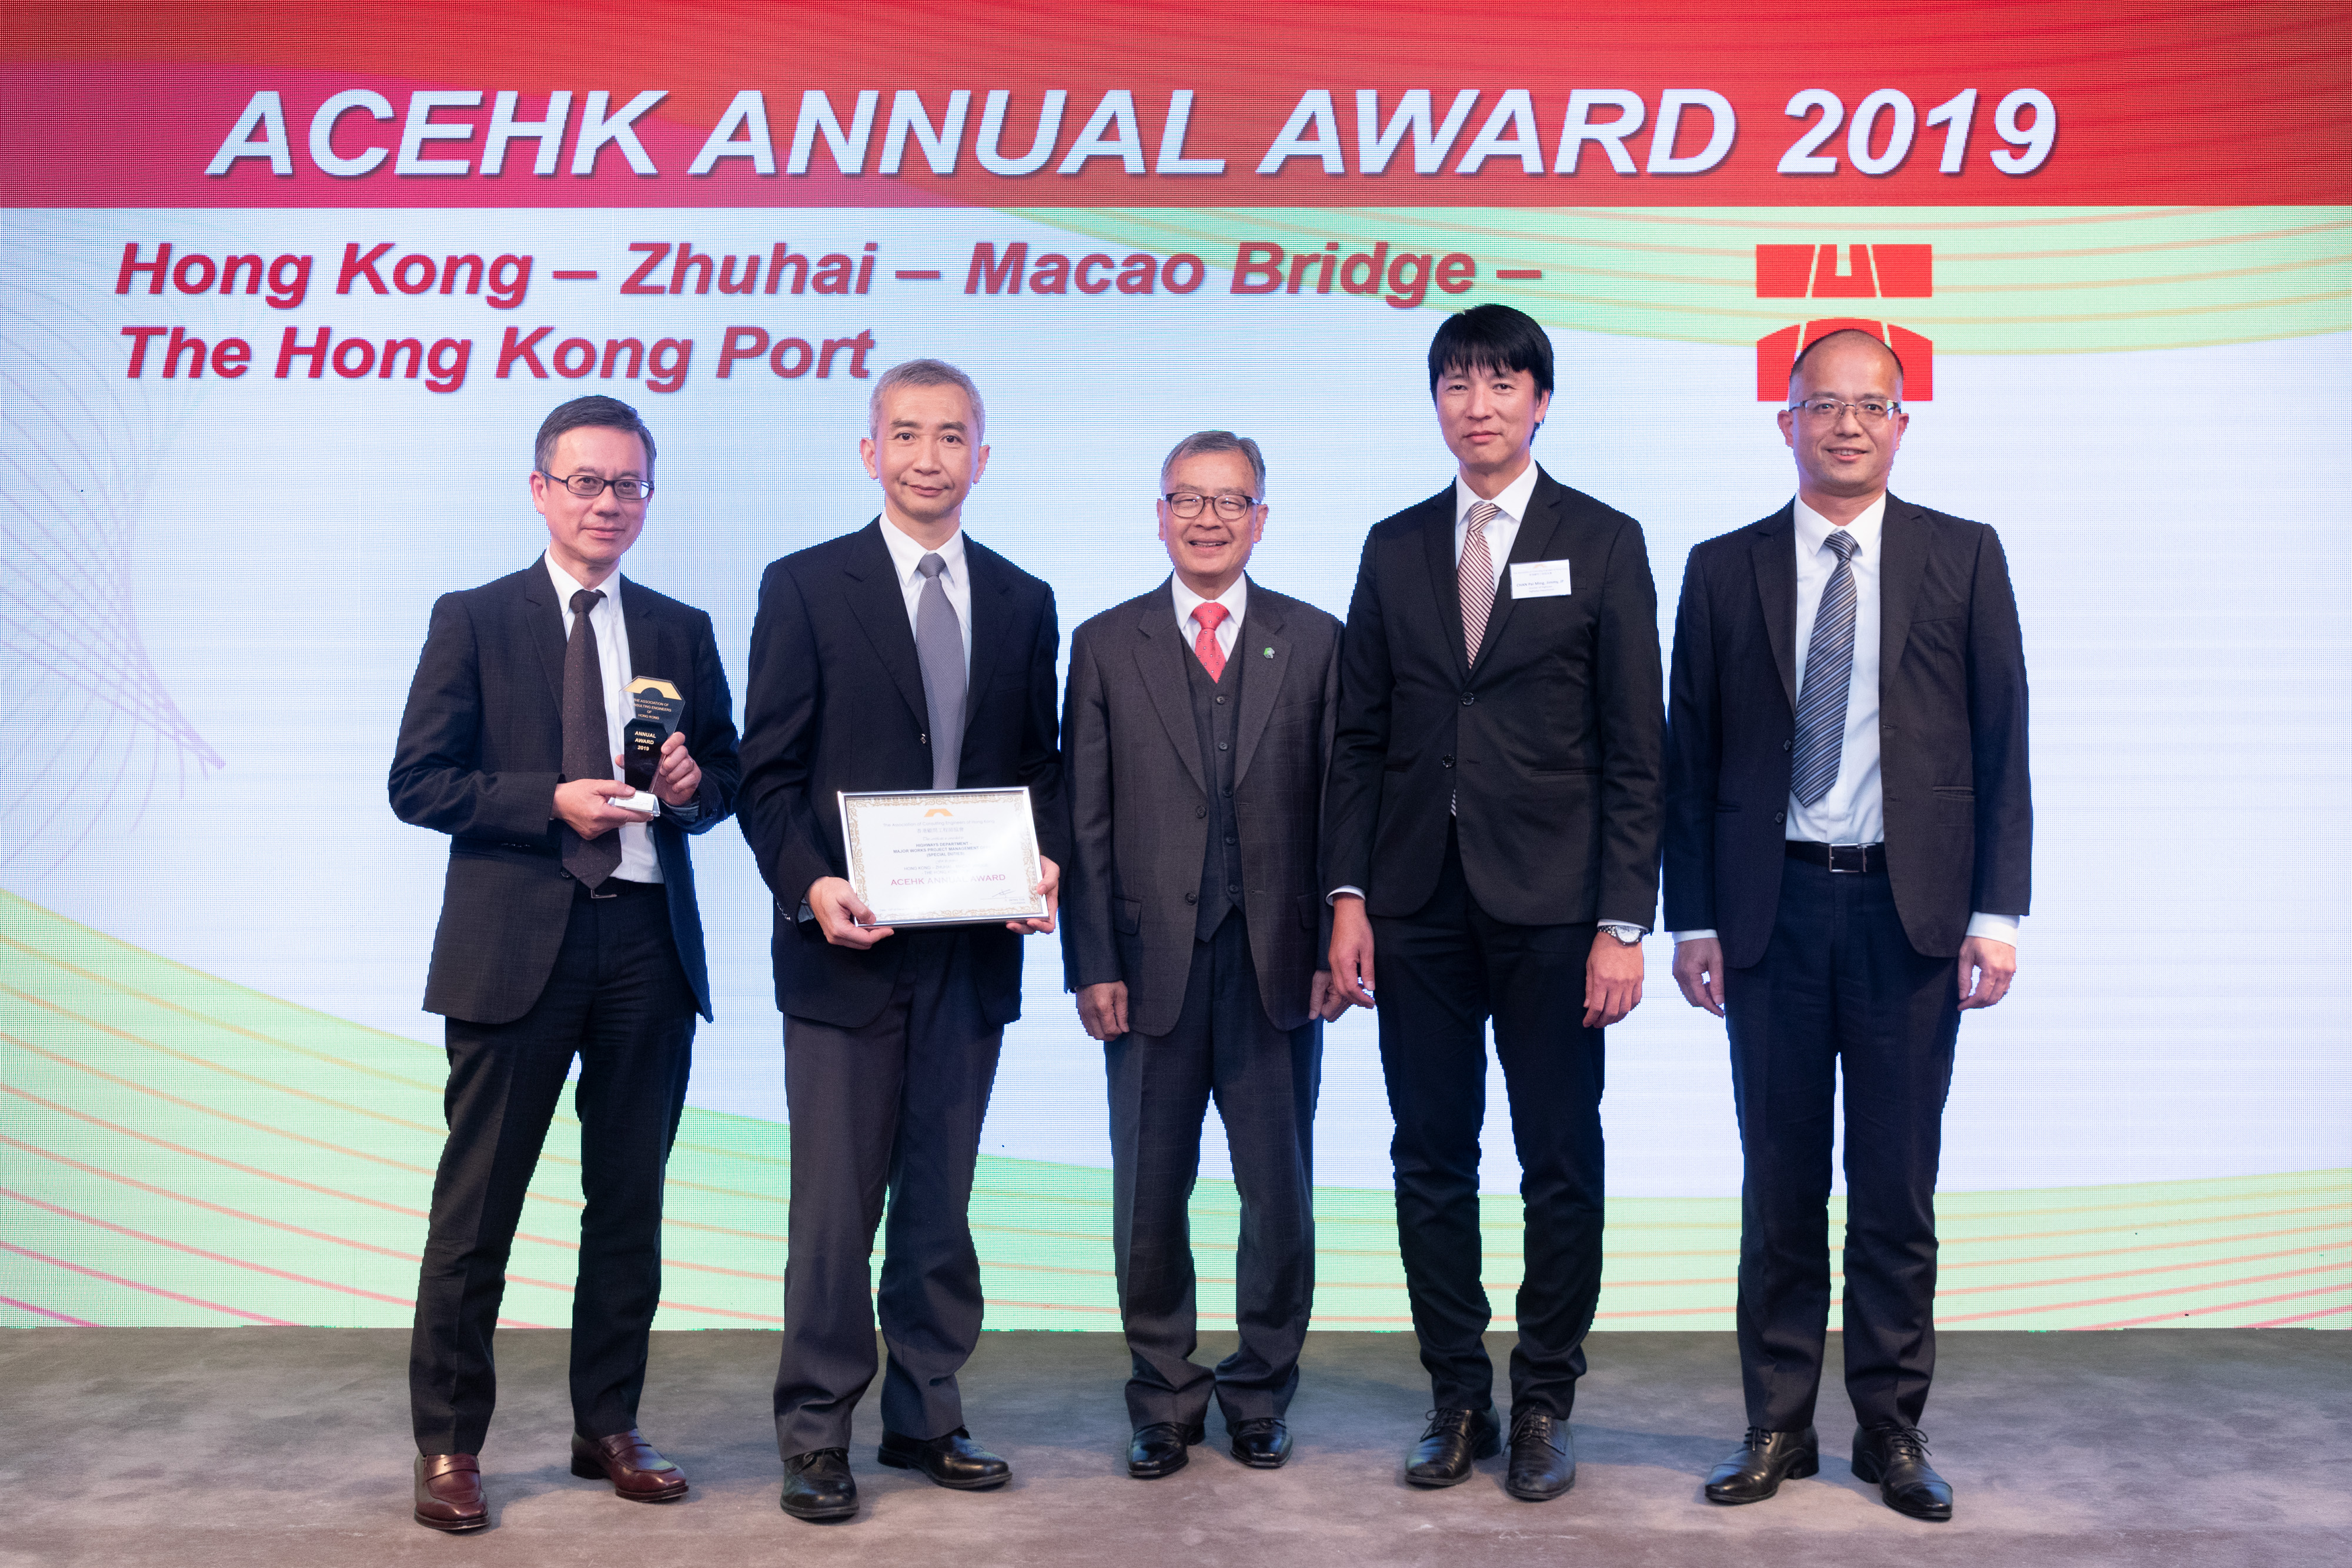 The Hong Kong – Zhuhai – Macao Bridge Hong Kong Port project was awarded the ACEHK Annual Award 2019.